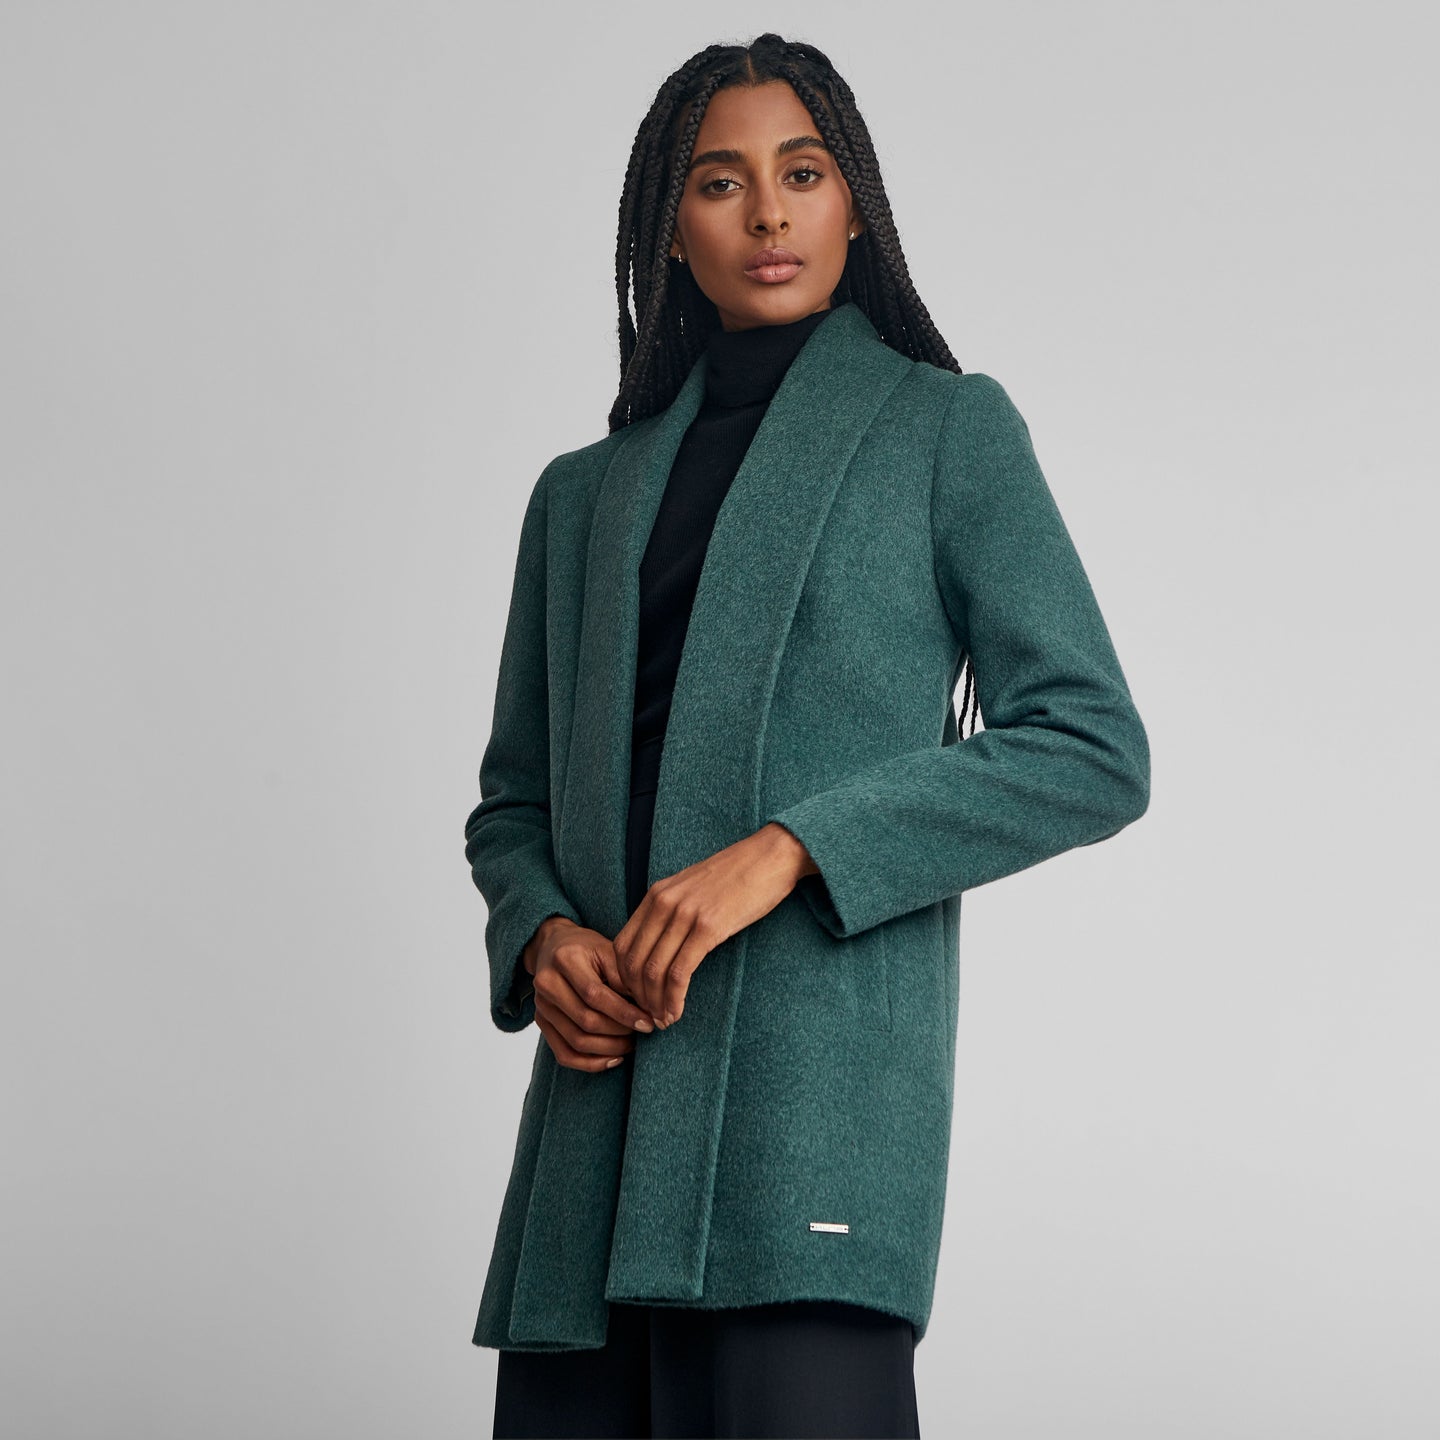 Kuna Short Swing Alpaca Coat – Warm, Beautiful Alpaca-Blend Coat